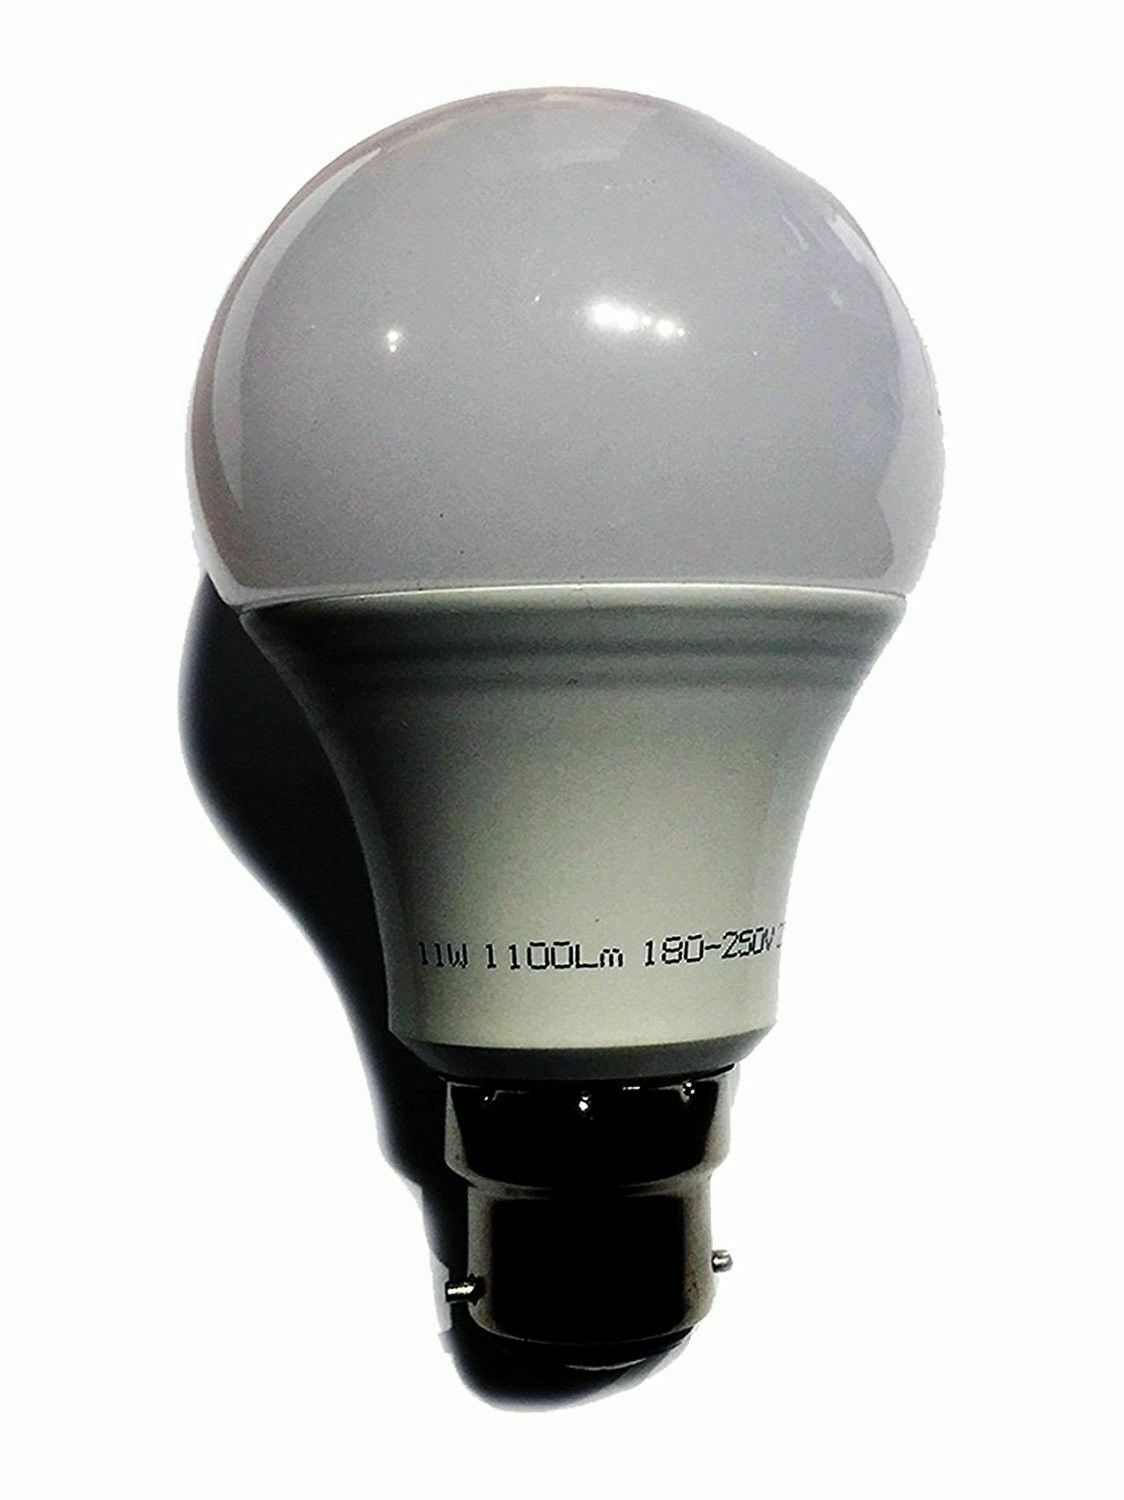 Standard LED bulbs